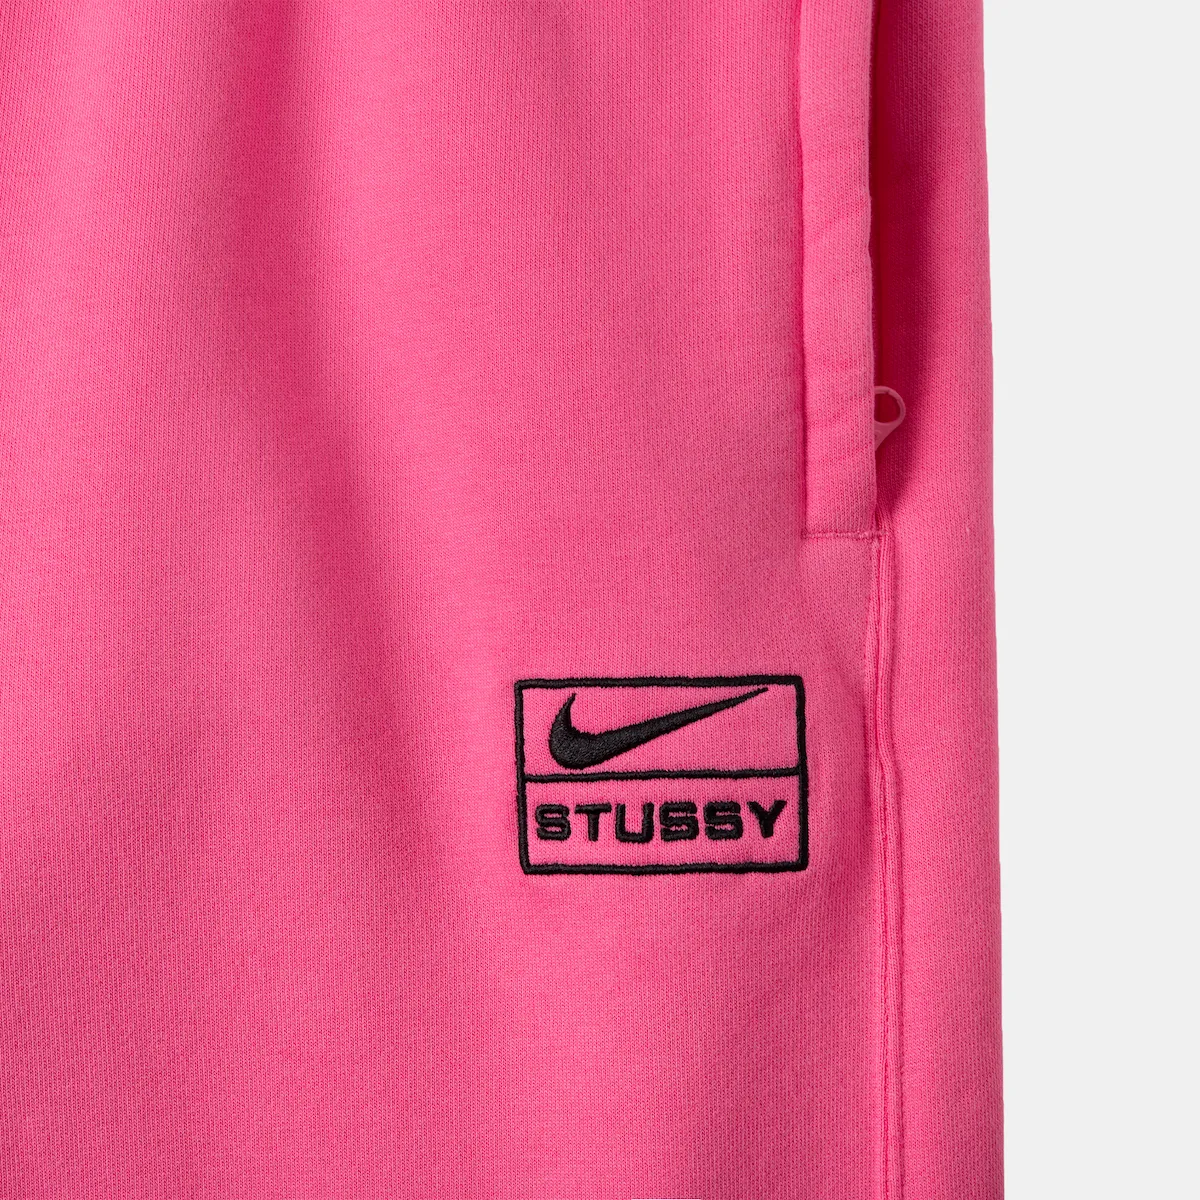 stussy-nike-air-max-2013-apparel-release-20220806